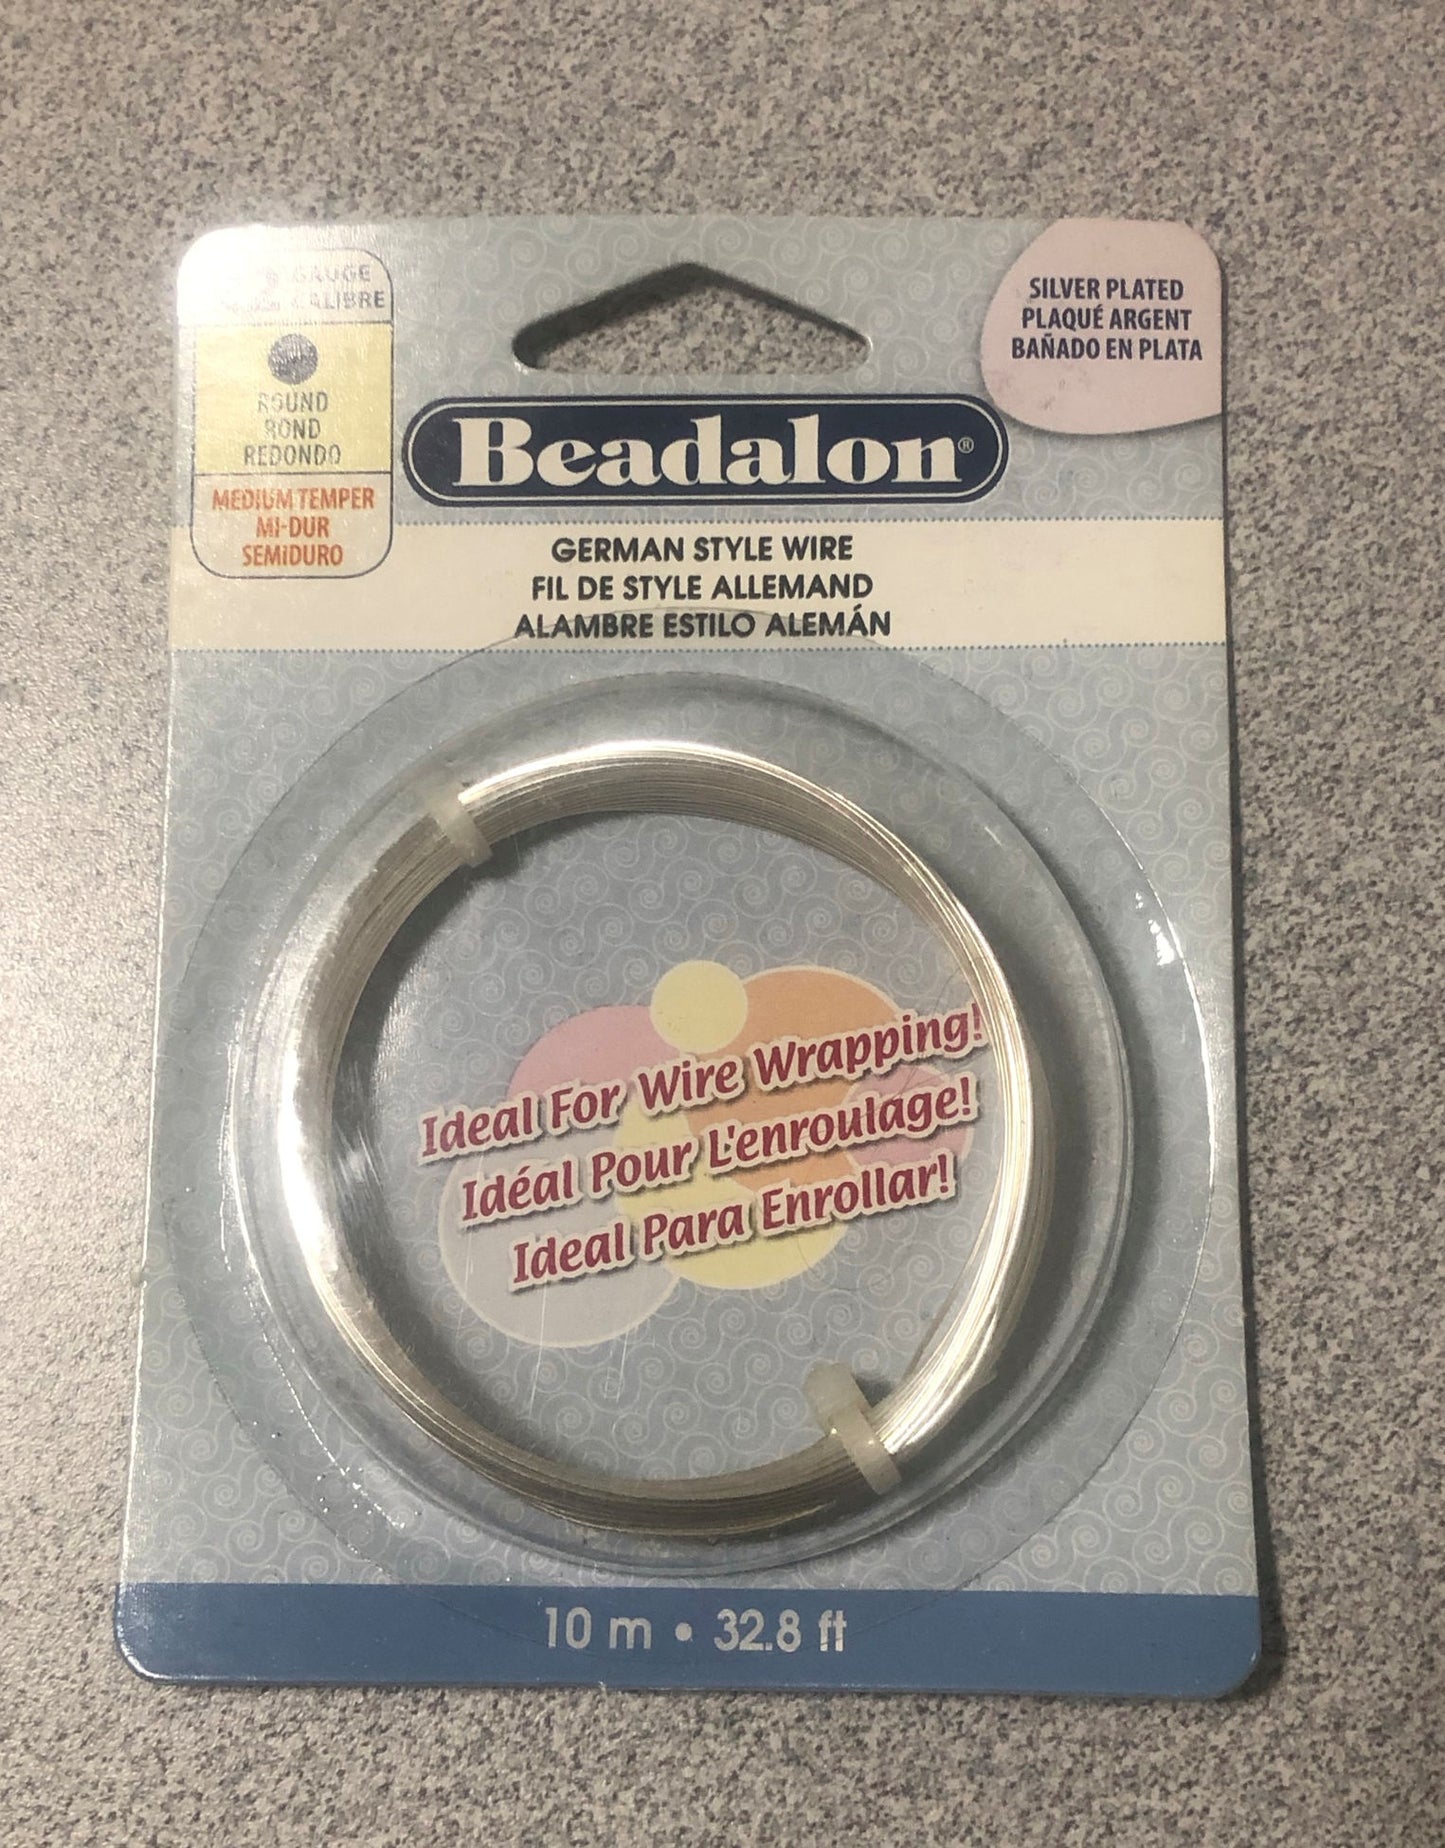 Beadalon Round 22-Gauge Medium Temper Silver Plated Wire, 10 m/32.8 ft, 180B-022